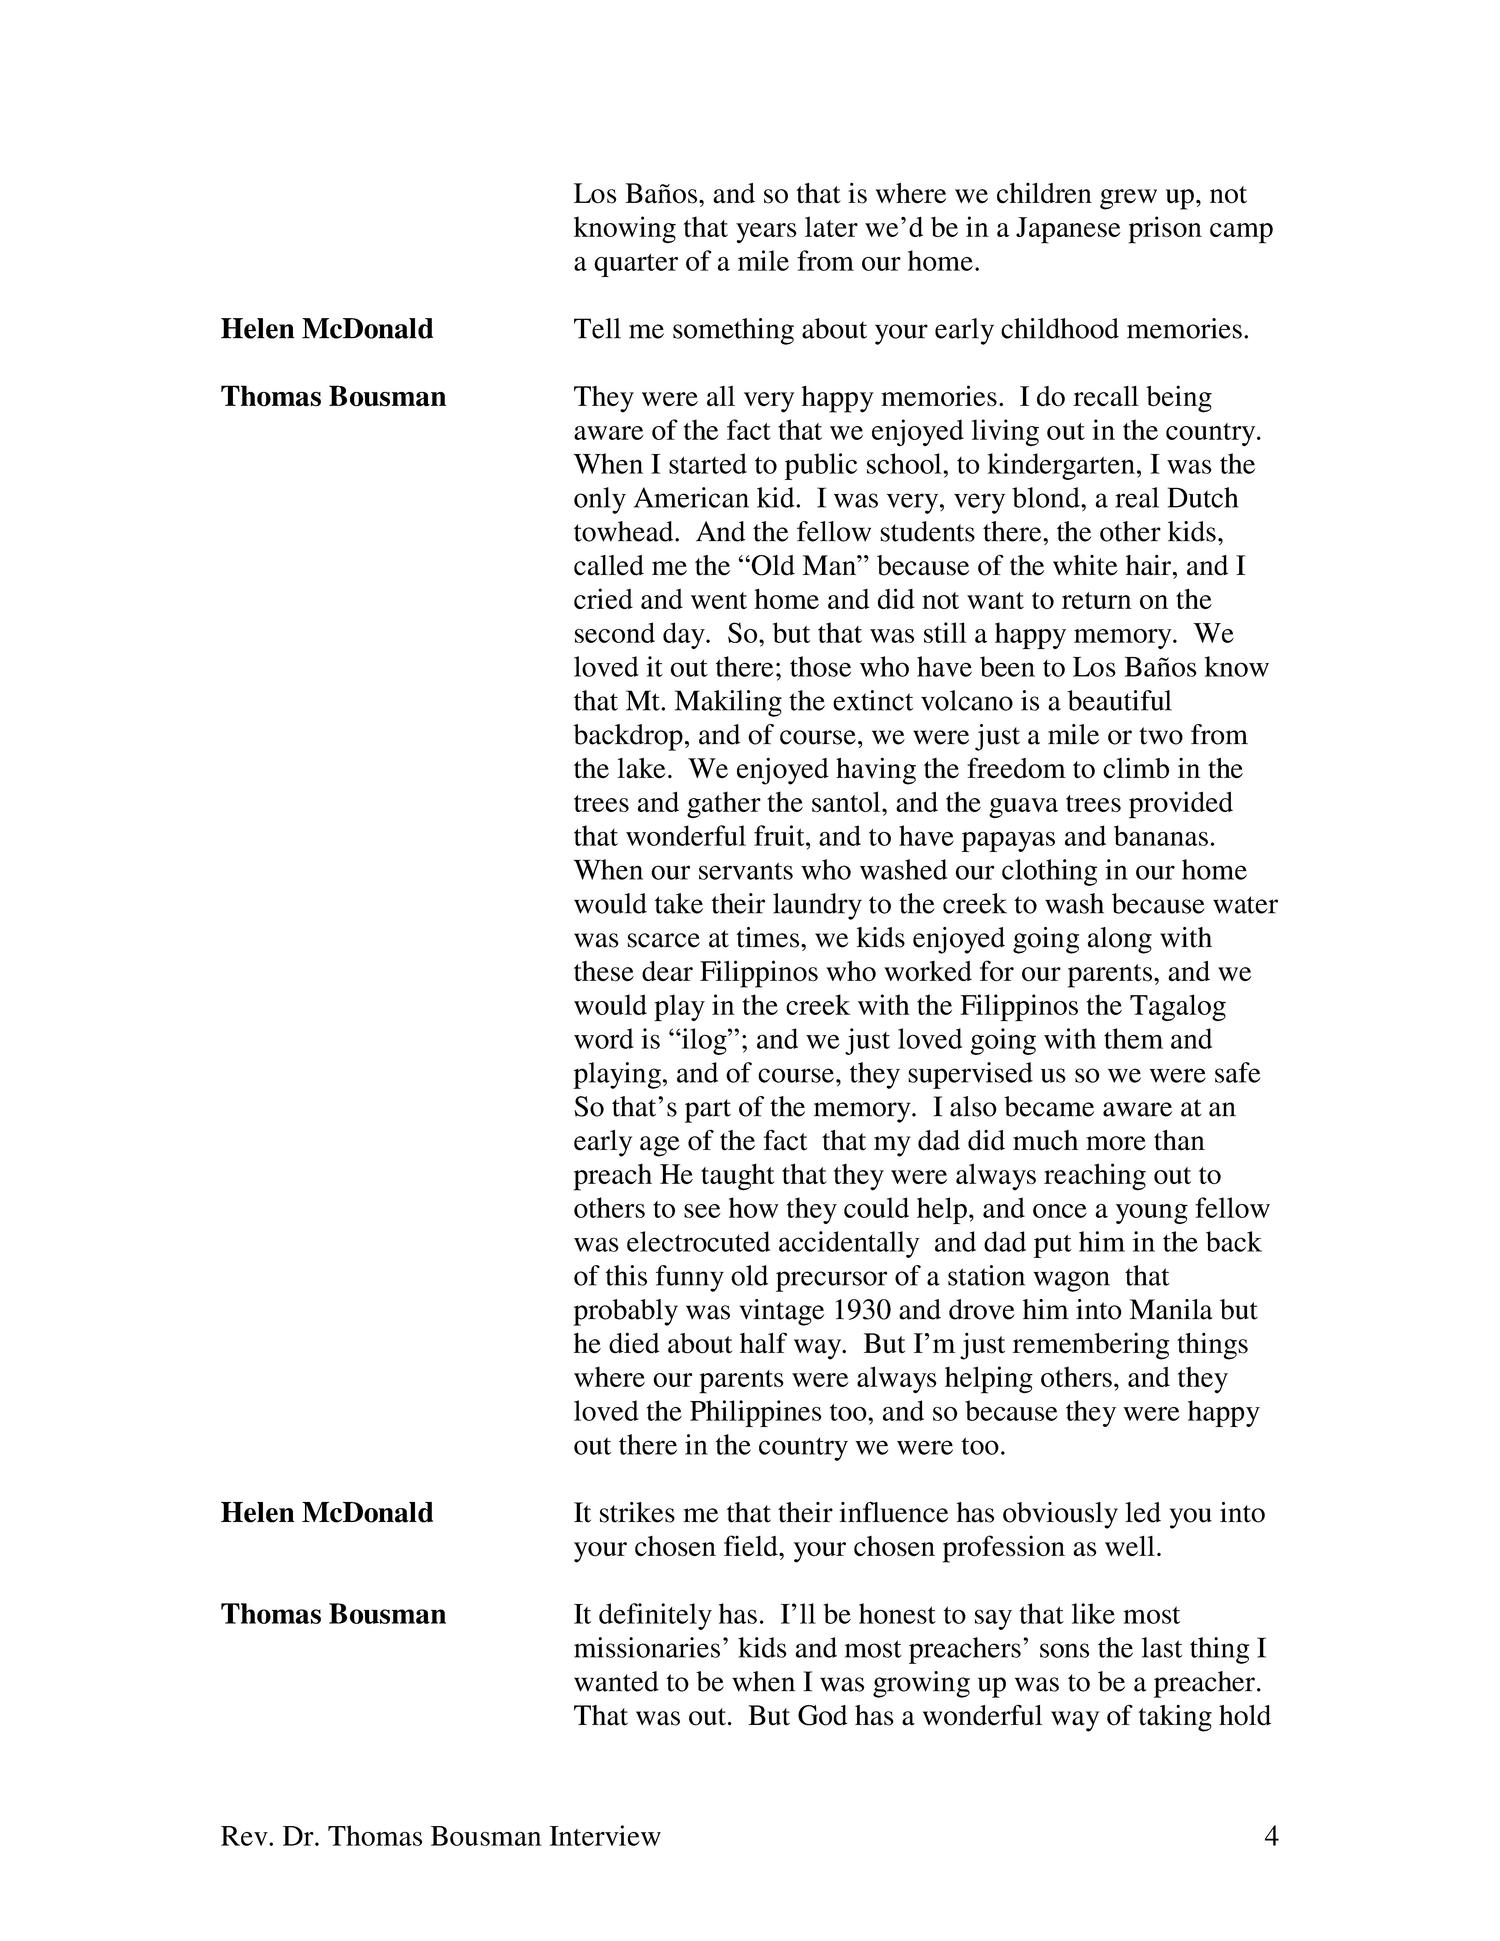 Oral History Interview with Thomas Bousman, April 28, 2001
                                                
                                                    4
                                                